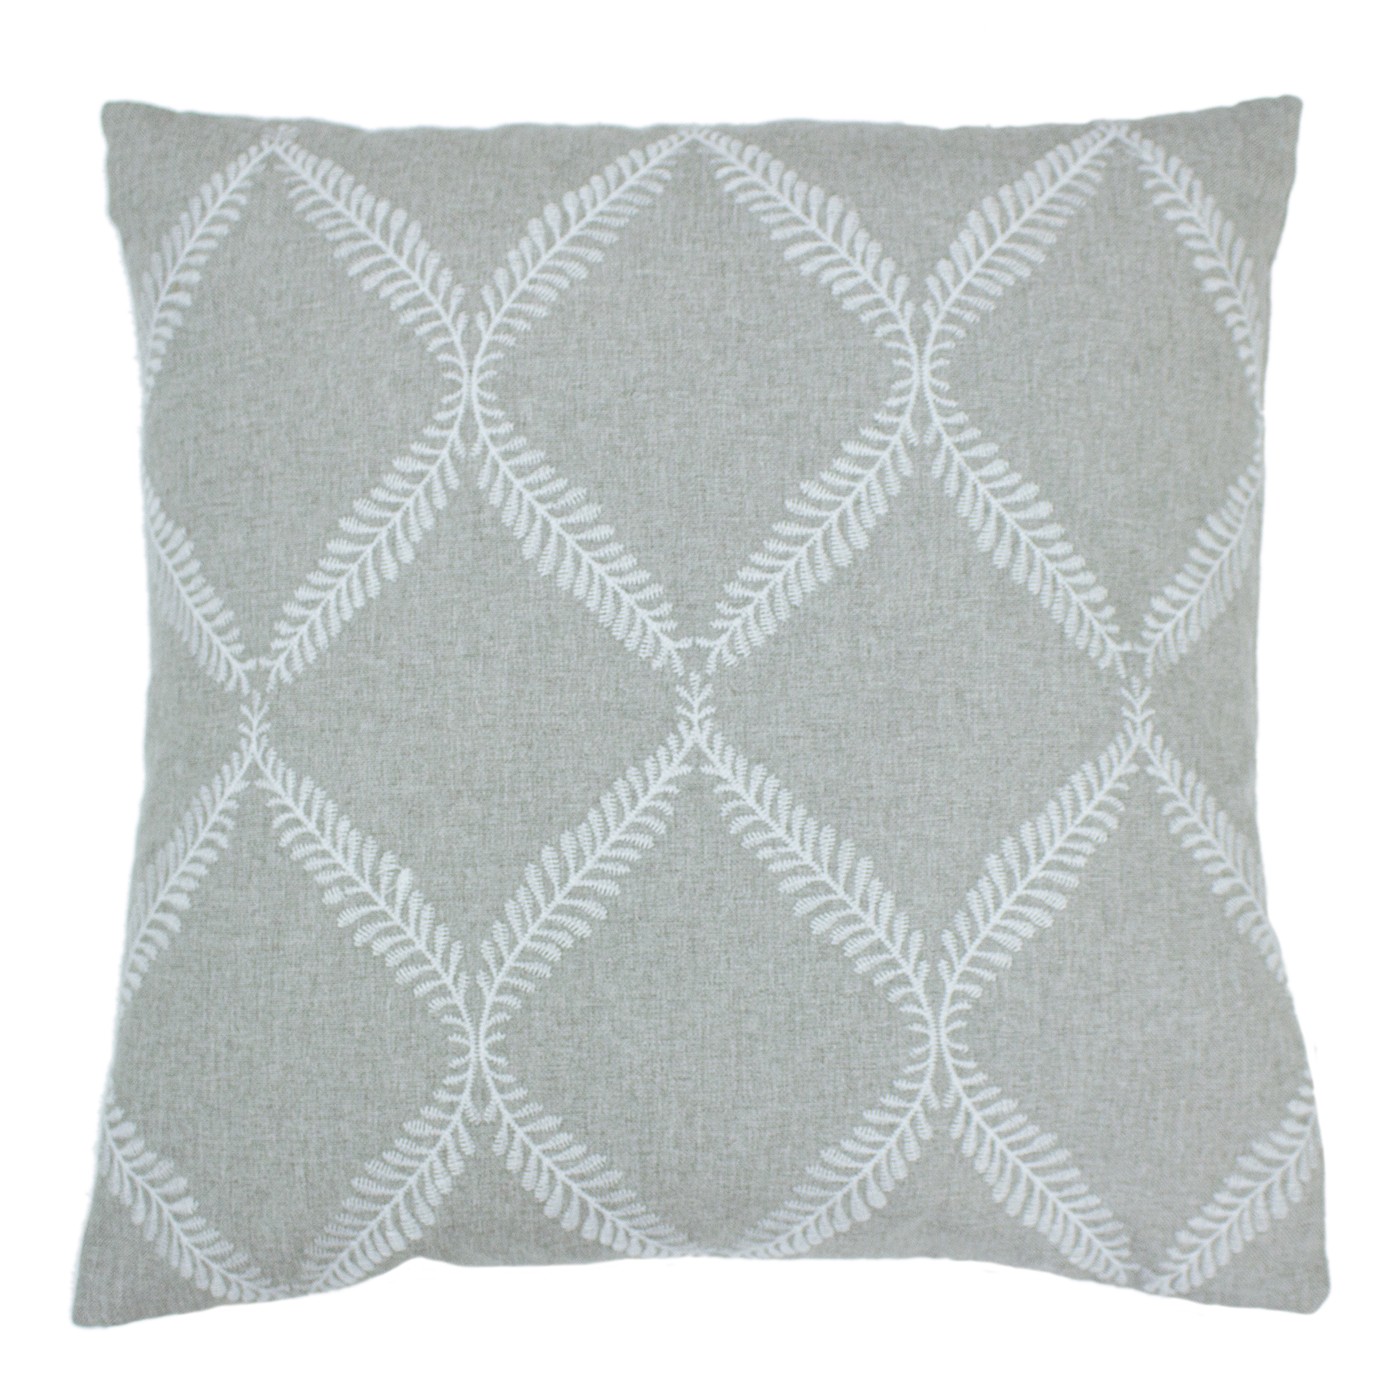 Victoria & Co. Grey and White Fern Cushion 45x45